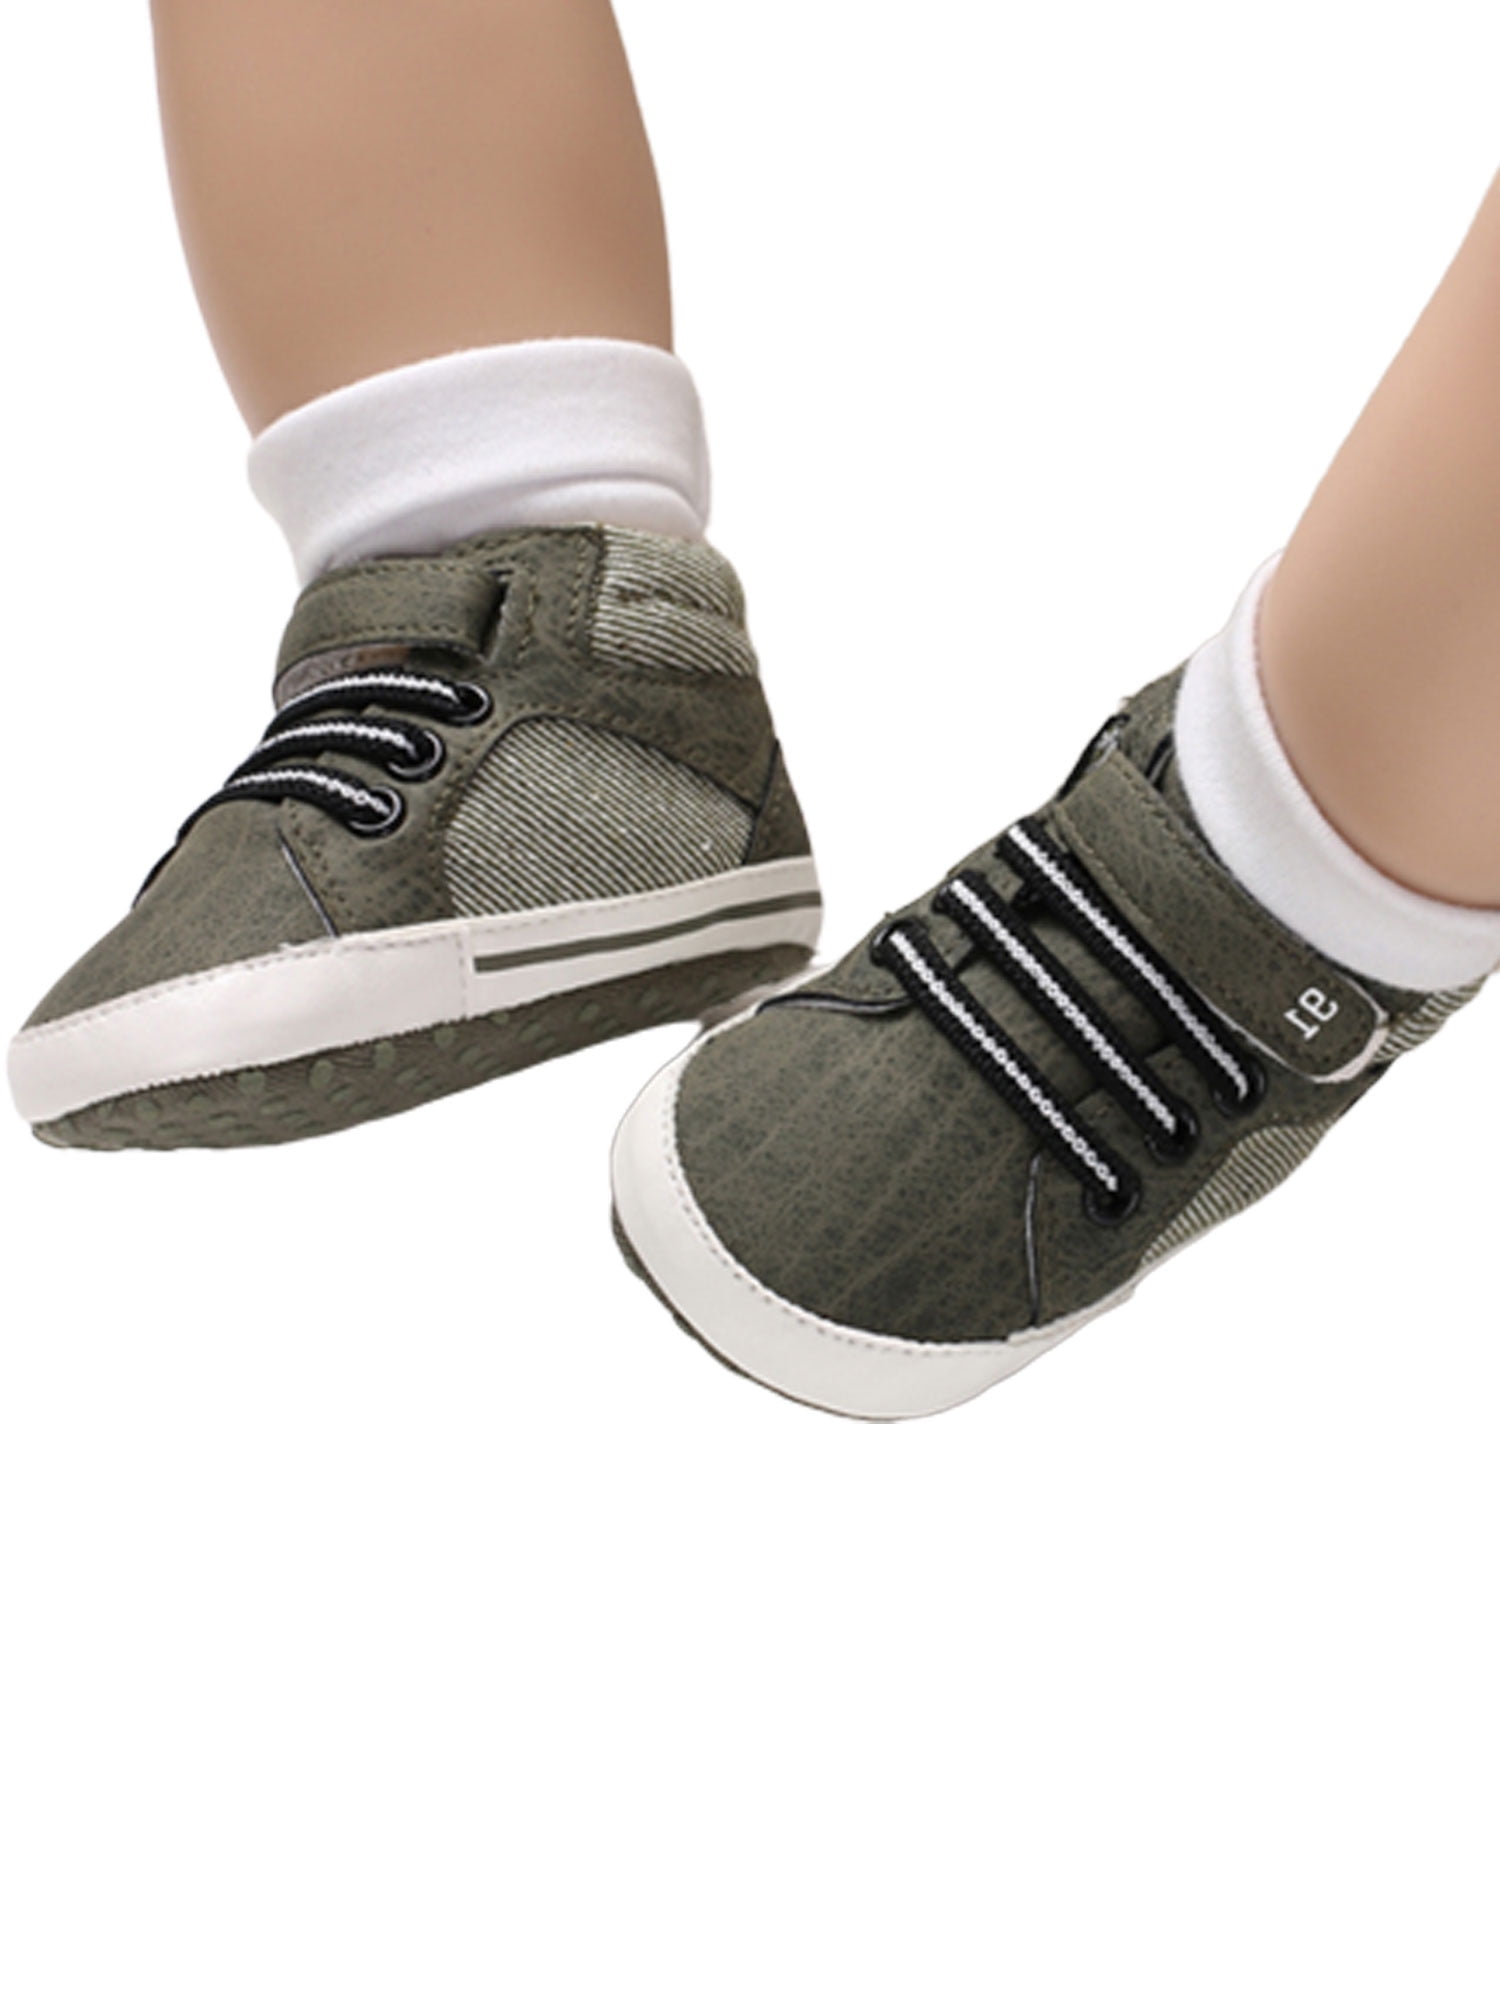 infant sock trainers